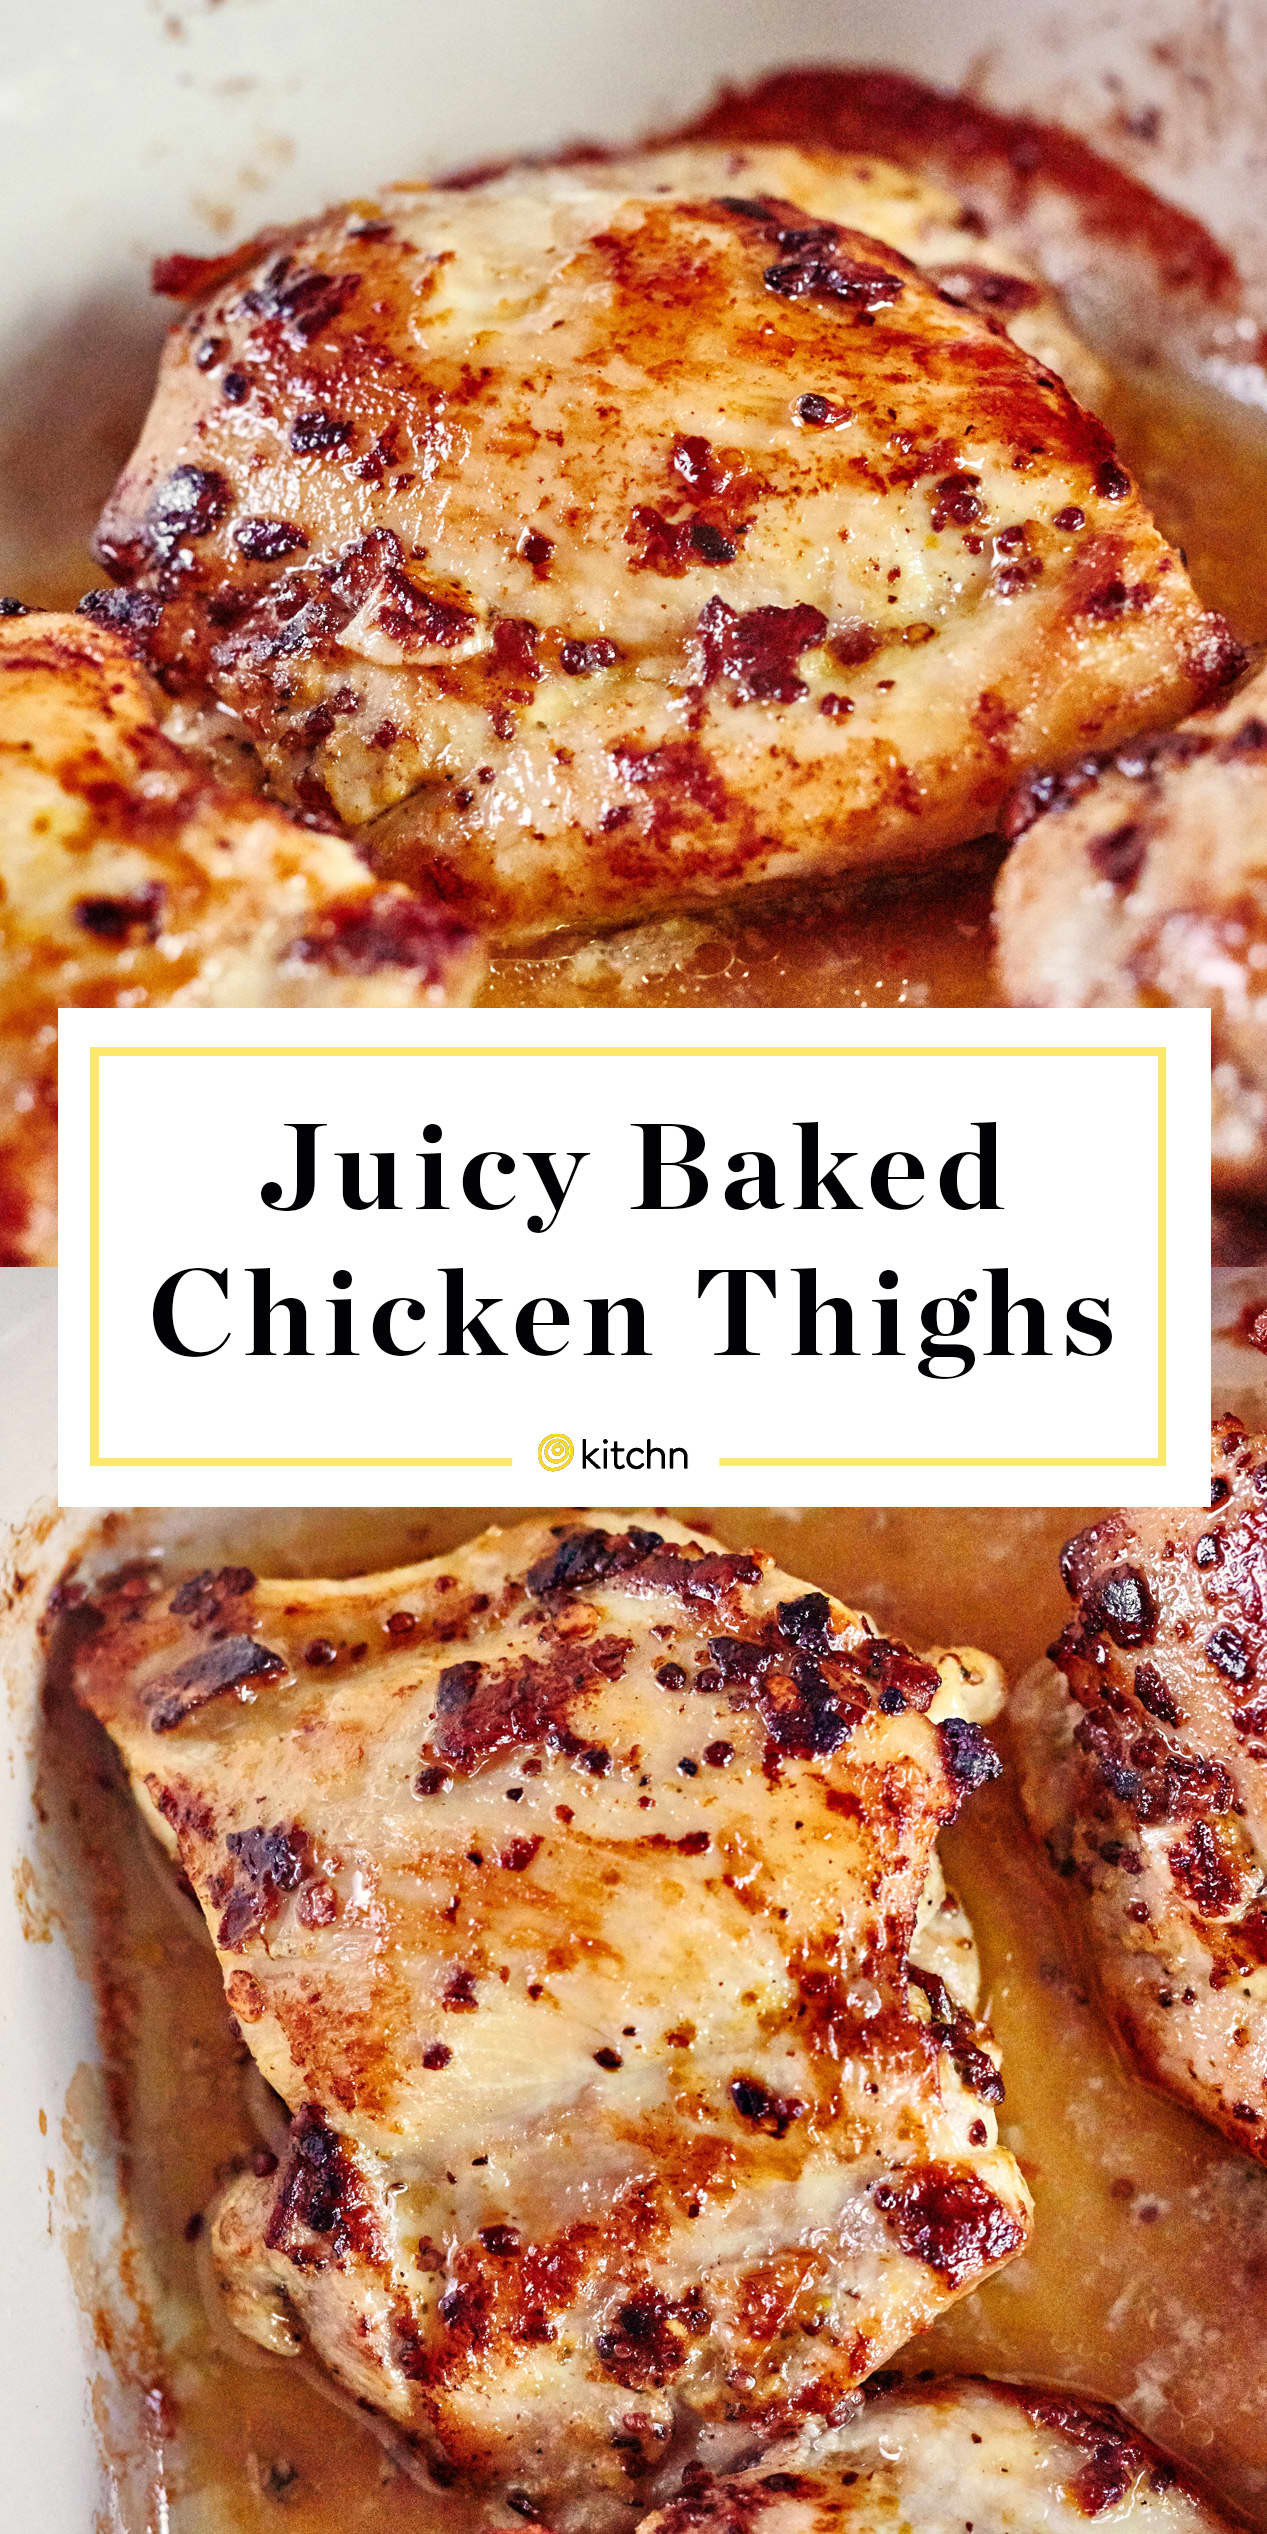 Boneless Chicken Thigh Recipe Baked
 How To Cook Boneless Skinless Chicken Thighs in the Oven